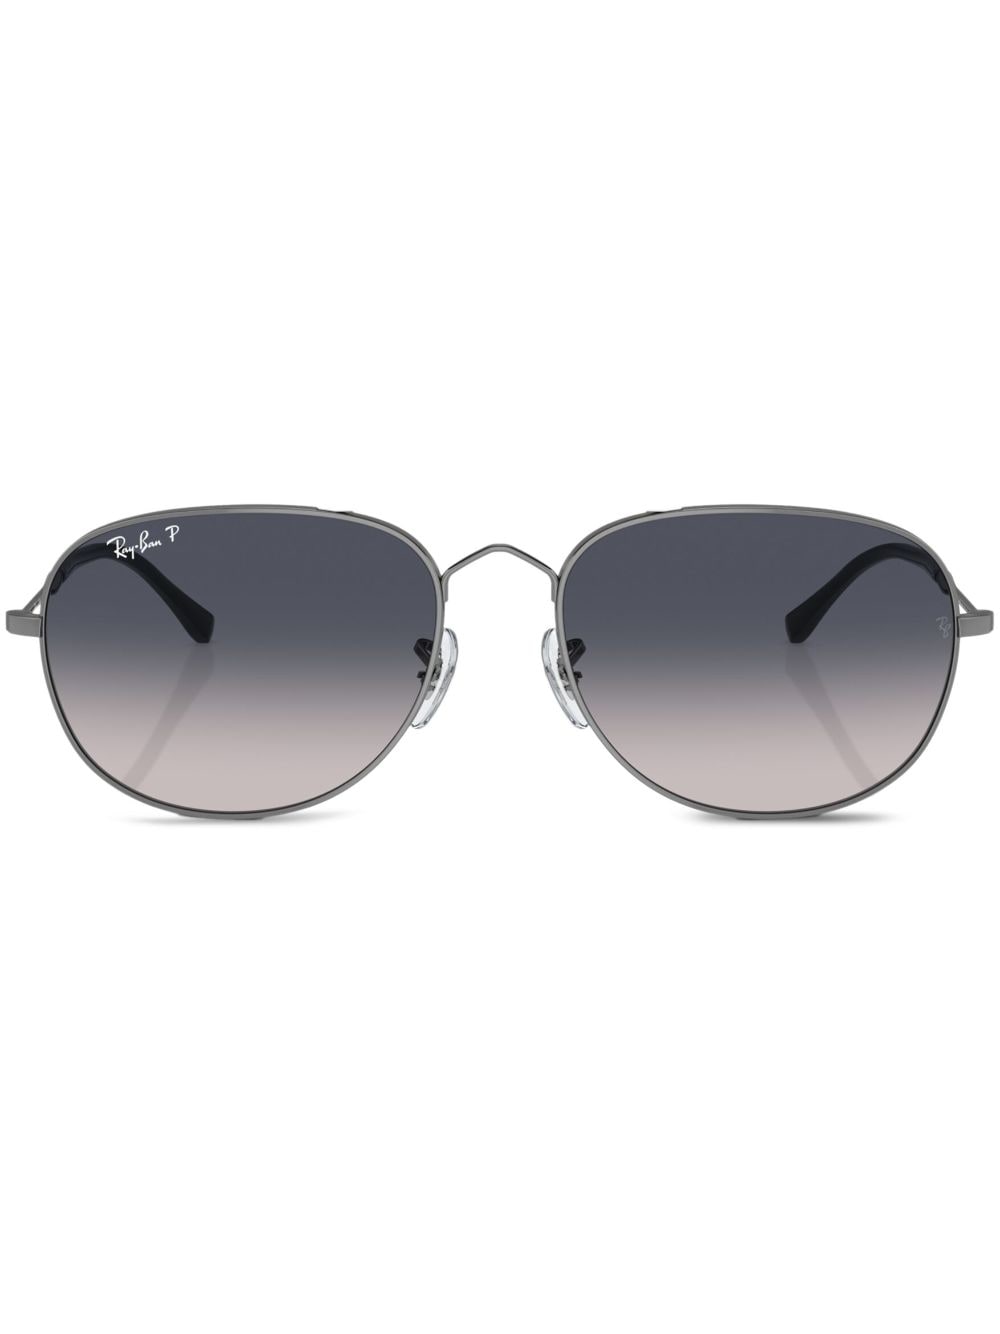 Bain pilot-frame sunglasses